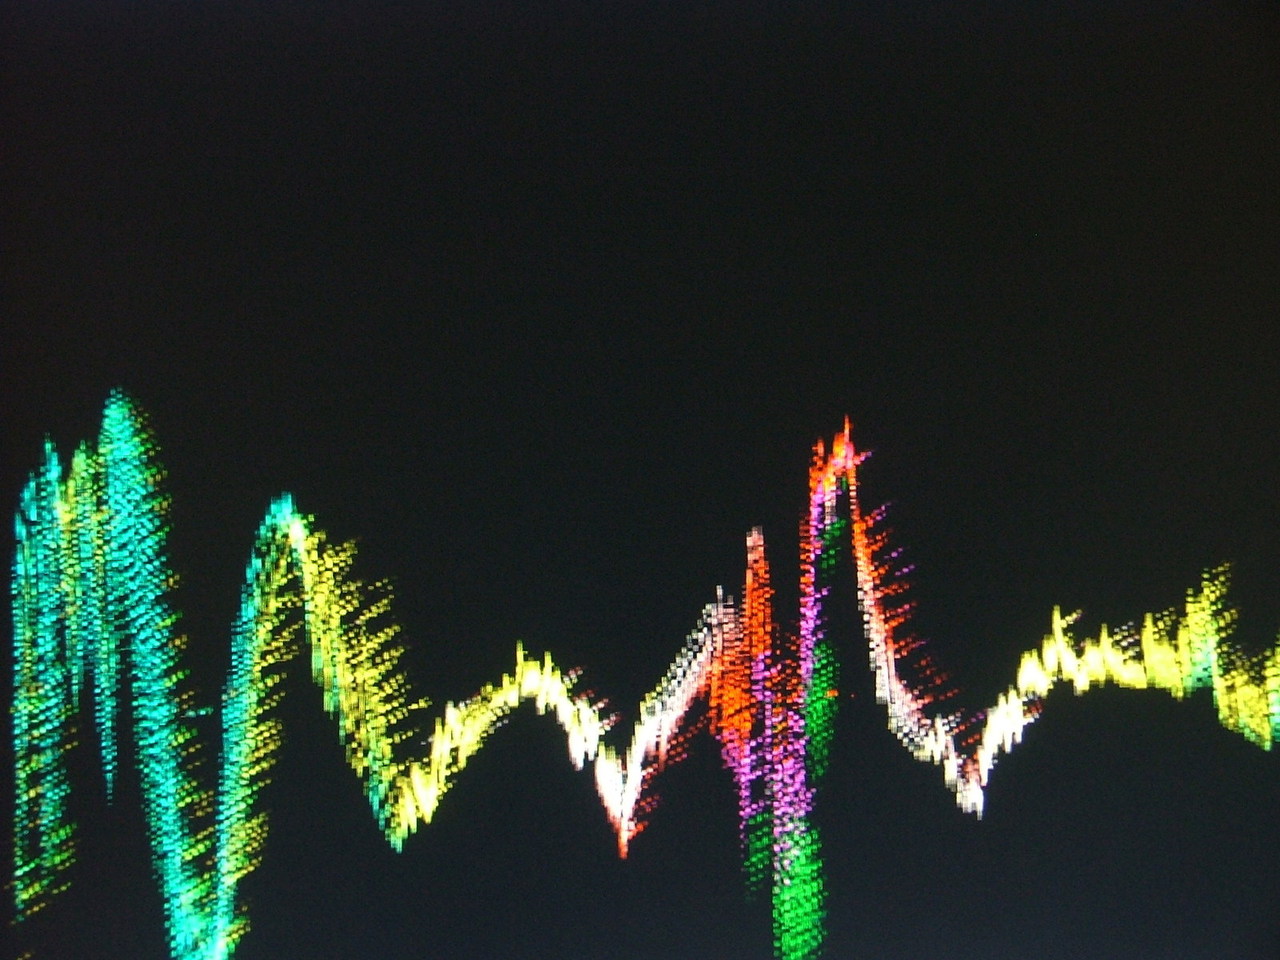 rainbow colored soundwaves